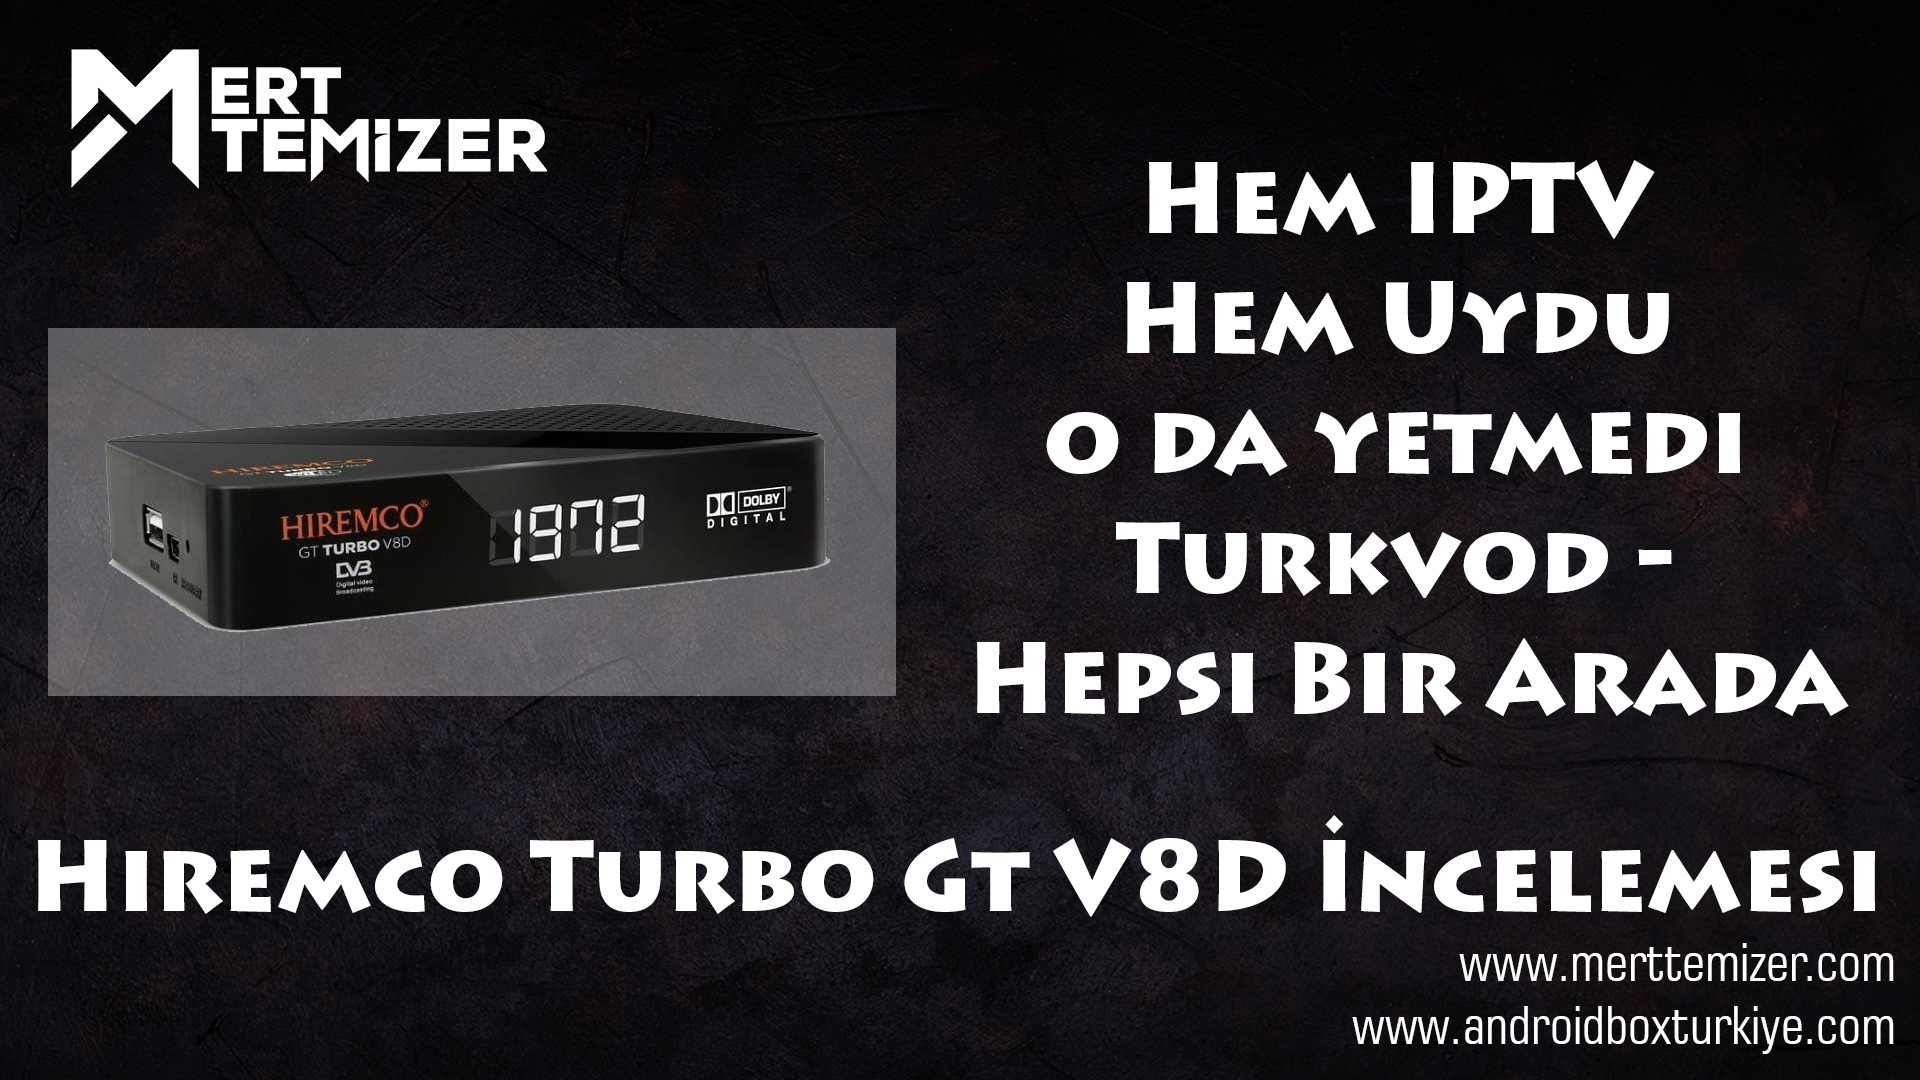 Hem IPTV Hem Uydu o da yetmedi Turkvod – Hepsi Bir Arada Hiremco Turbo Gt V8D İncelemesi